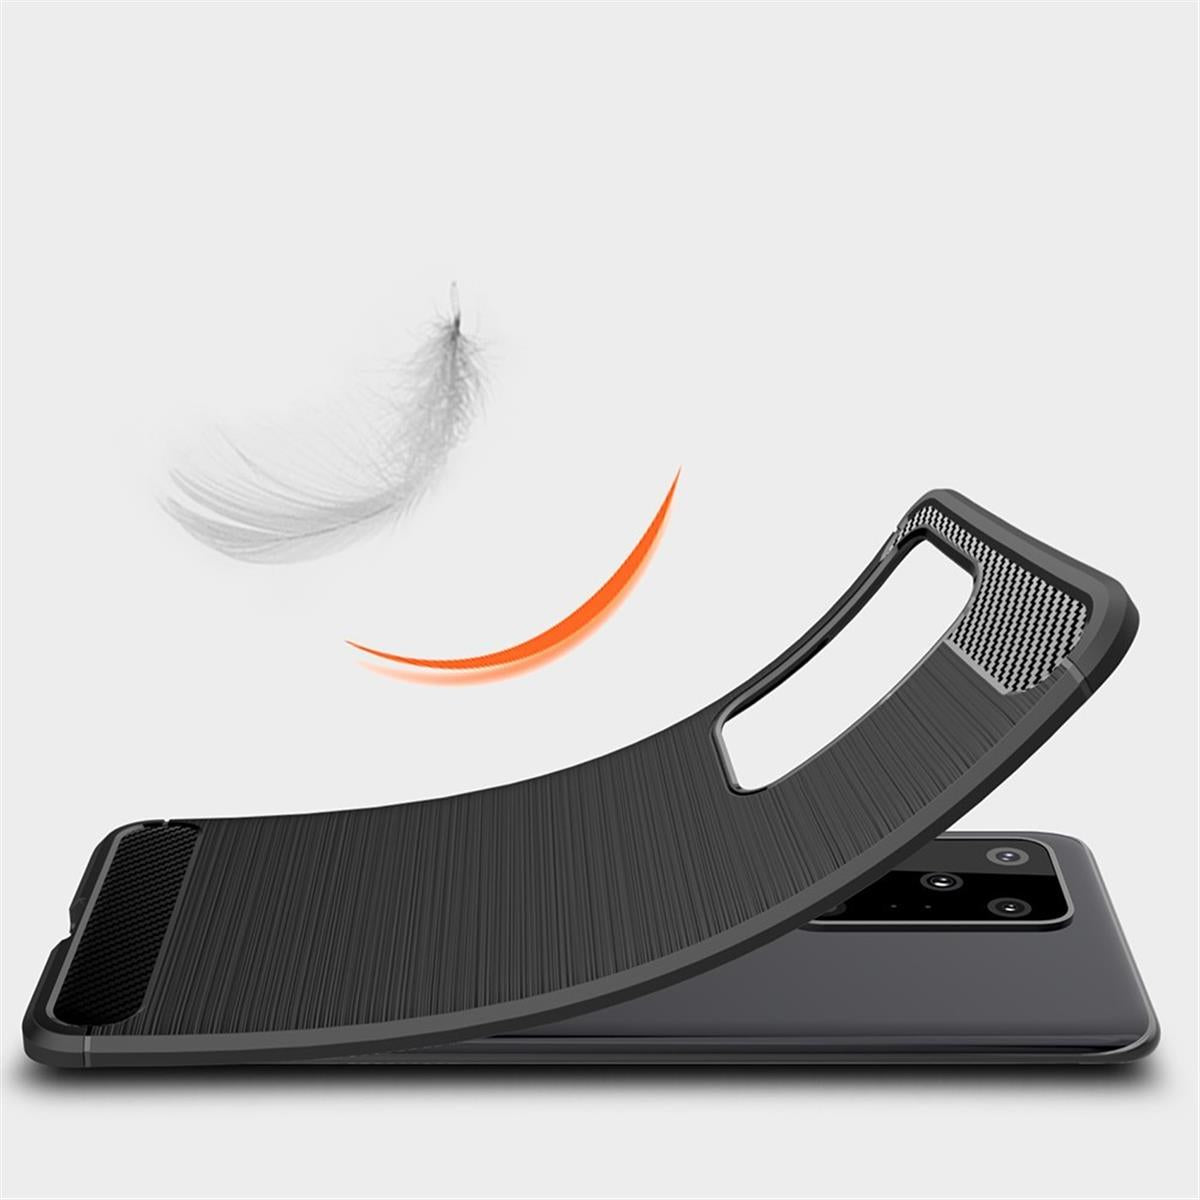 Hülle für Samsung Galaxy S20 Ultra Handyhülle Silikon Schutzhülle Carbon Farben